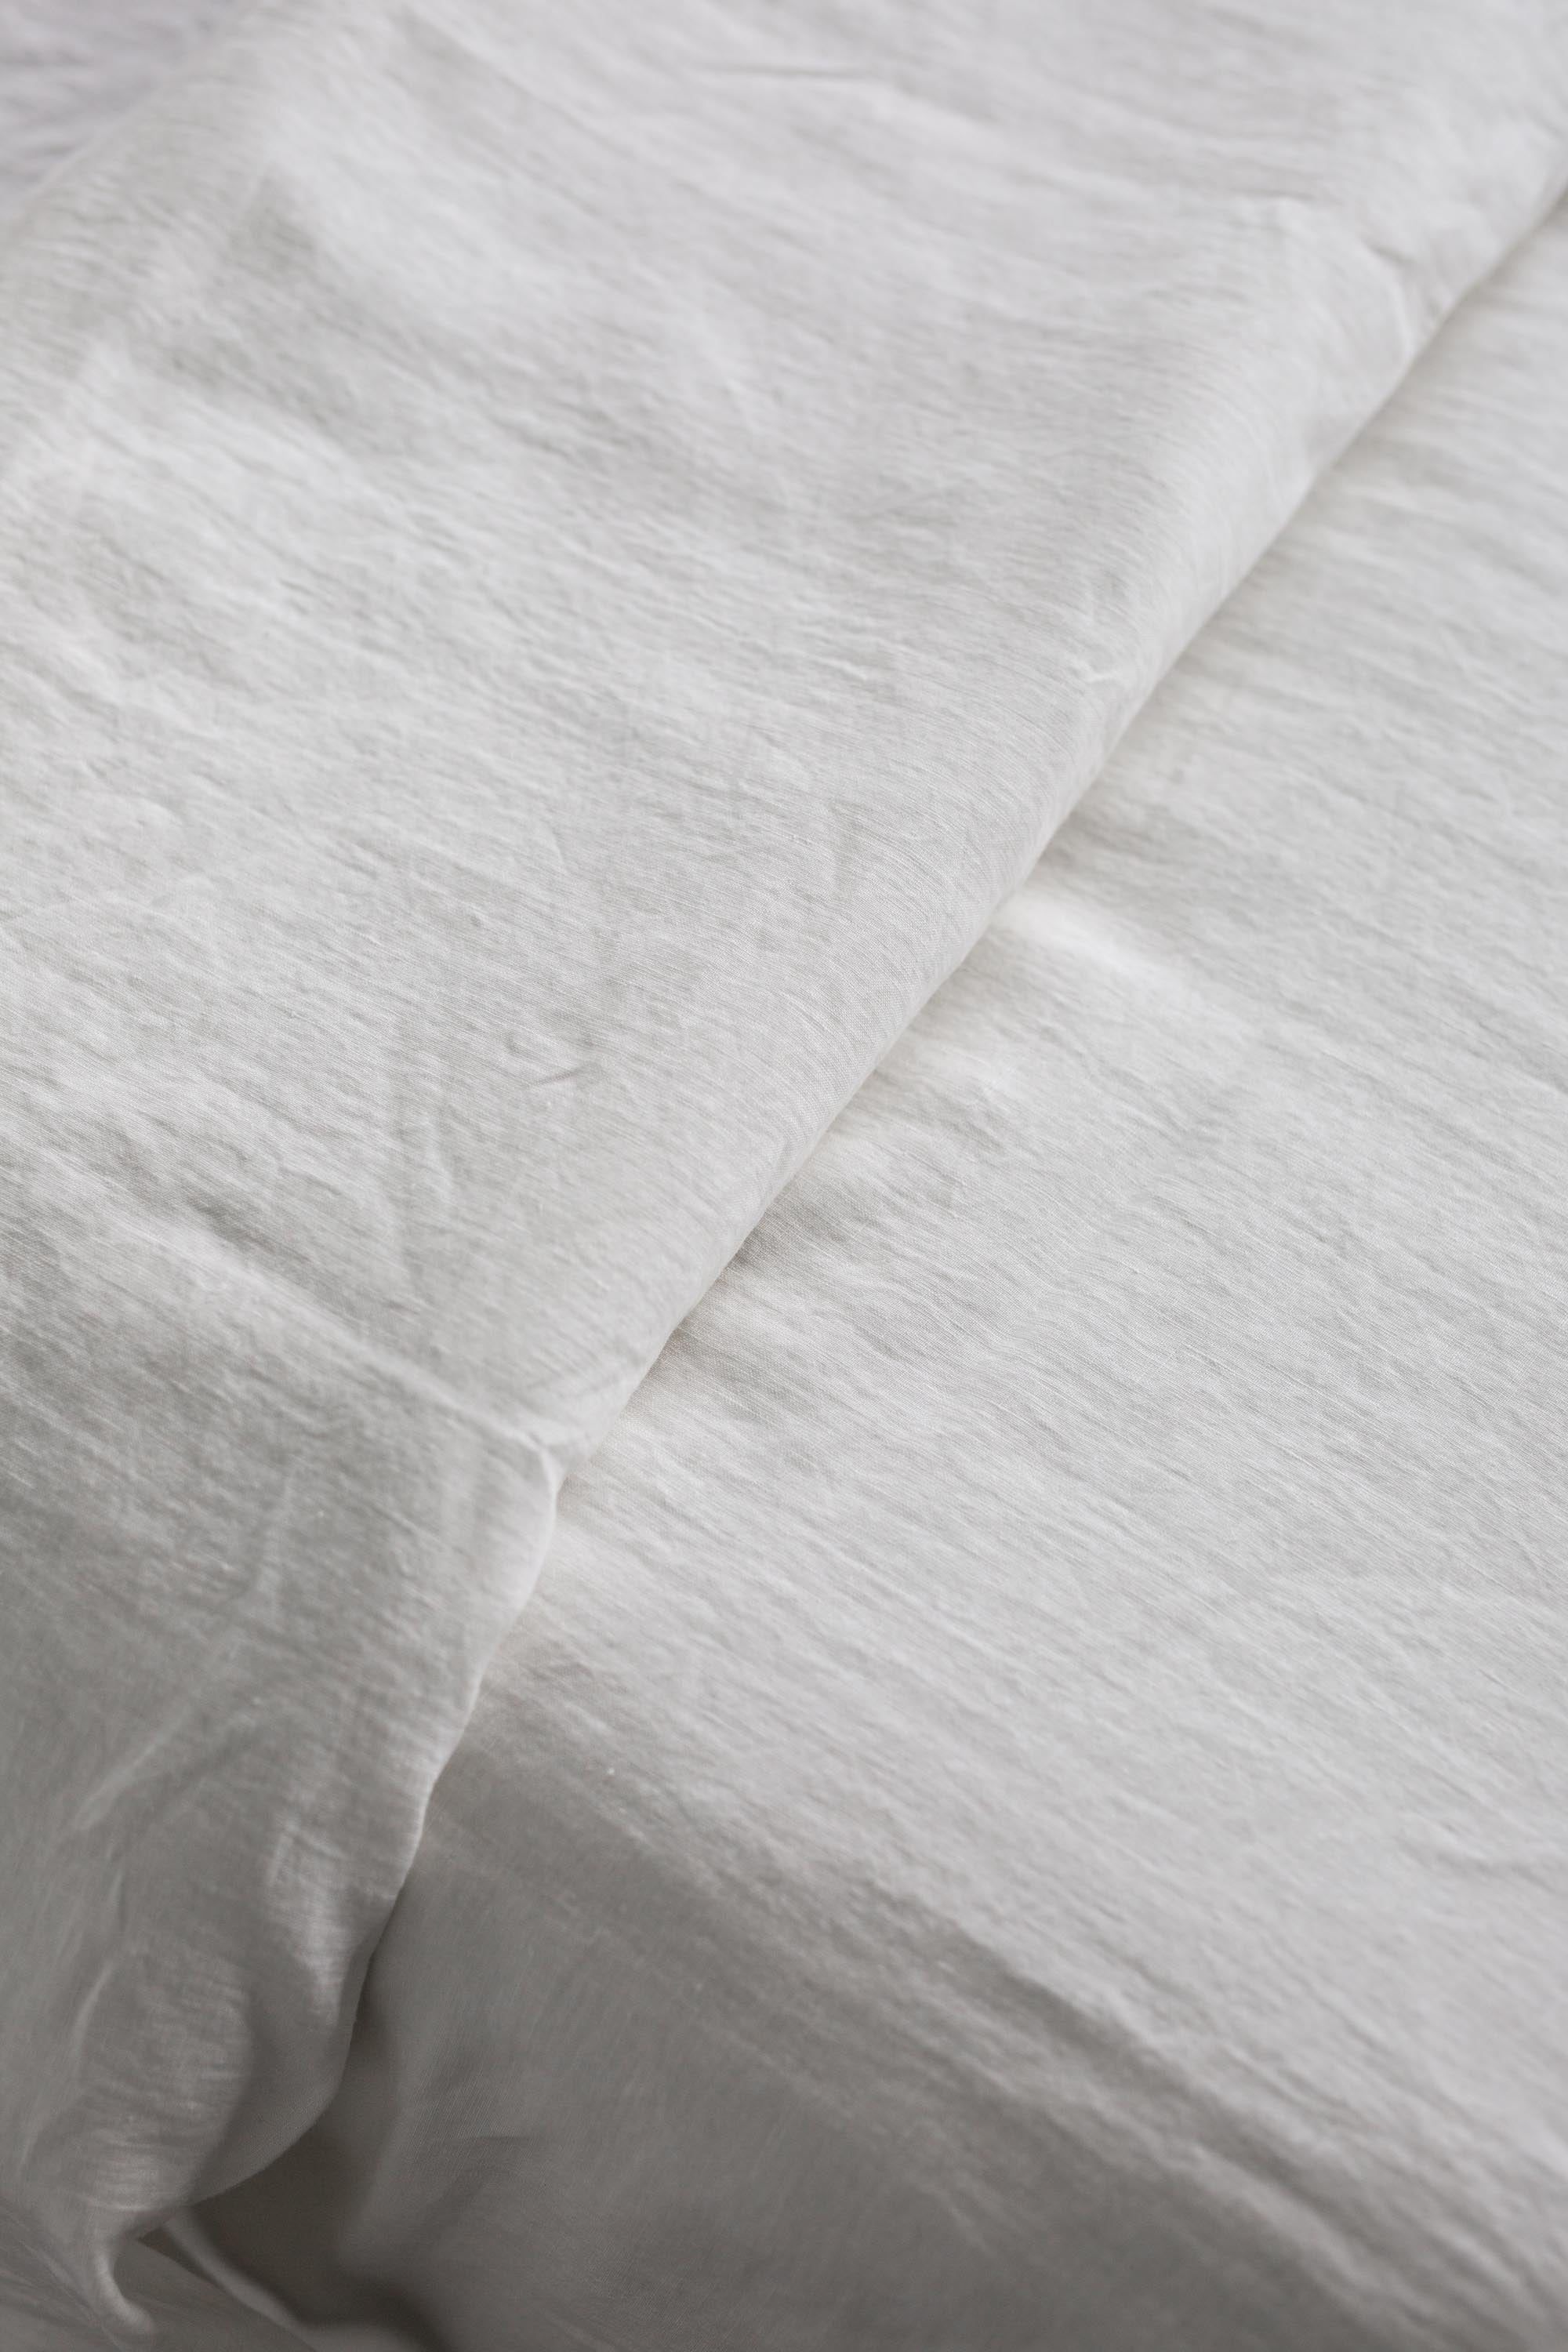 Close Up of White Linen Duvet Cover By AmourlInen